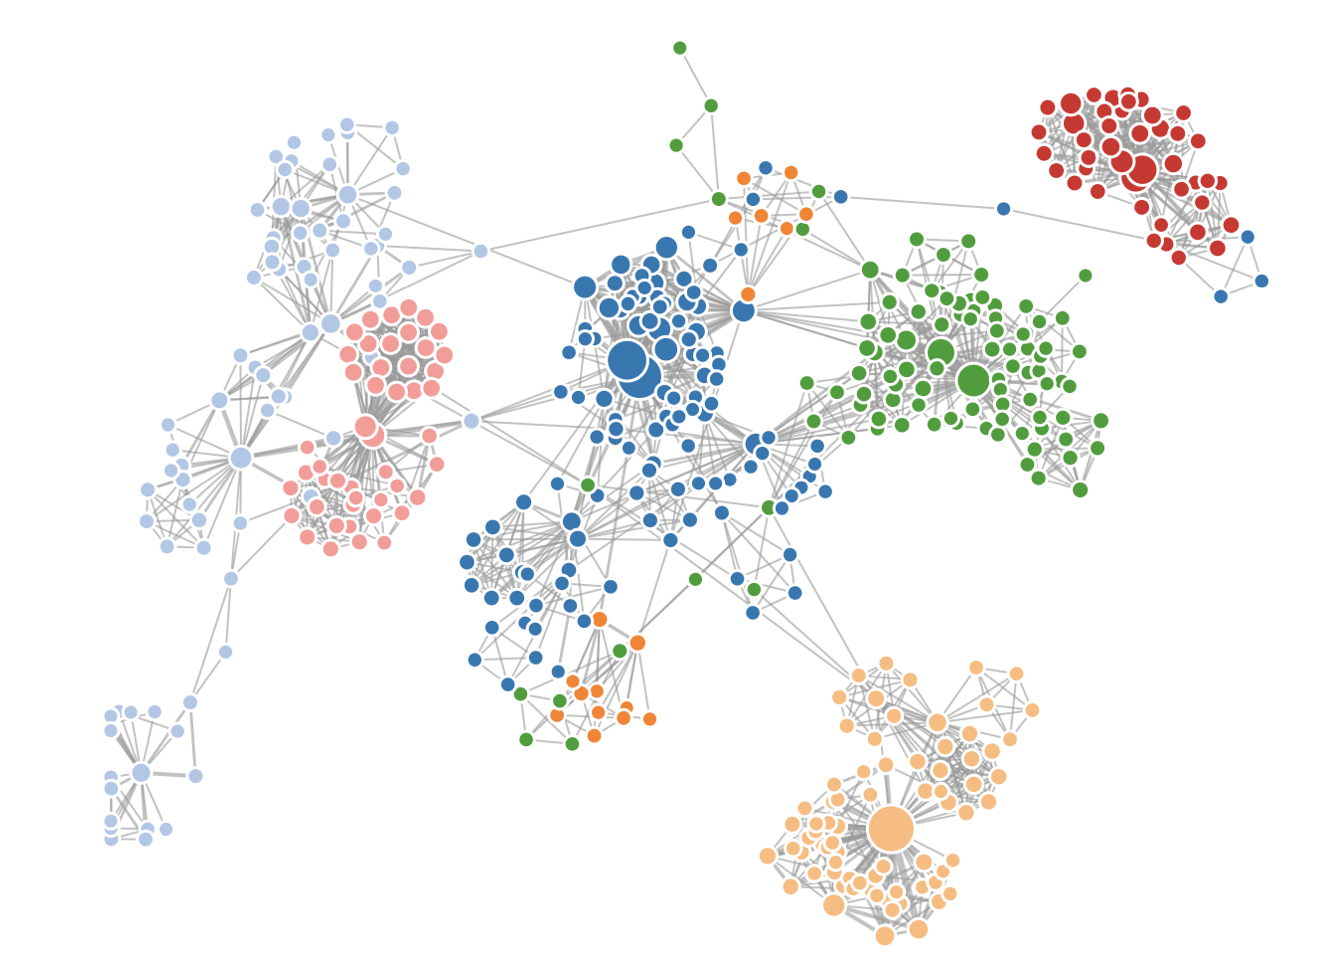 Screenshot of the Interactive Coauthorship Network Visualization